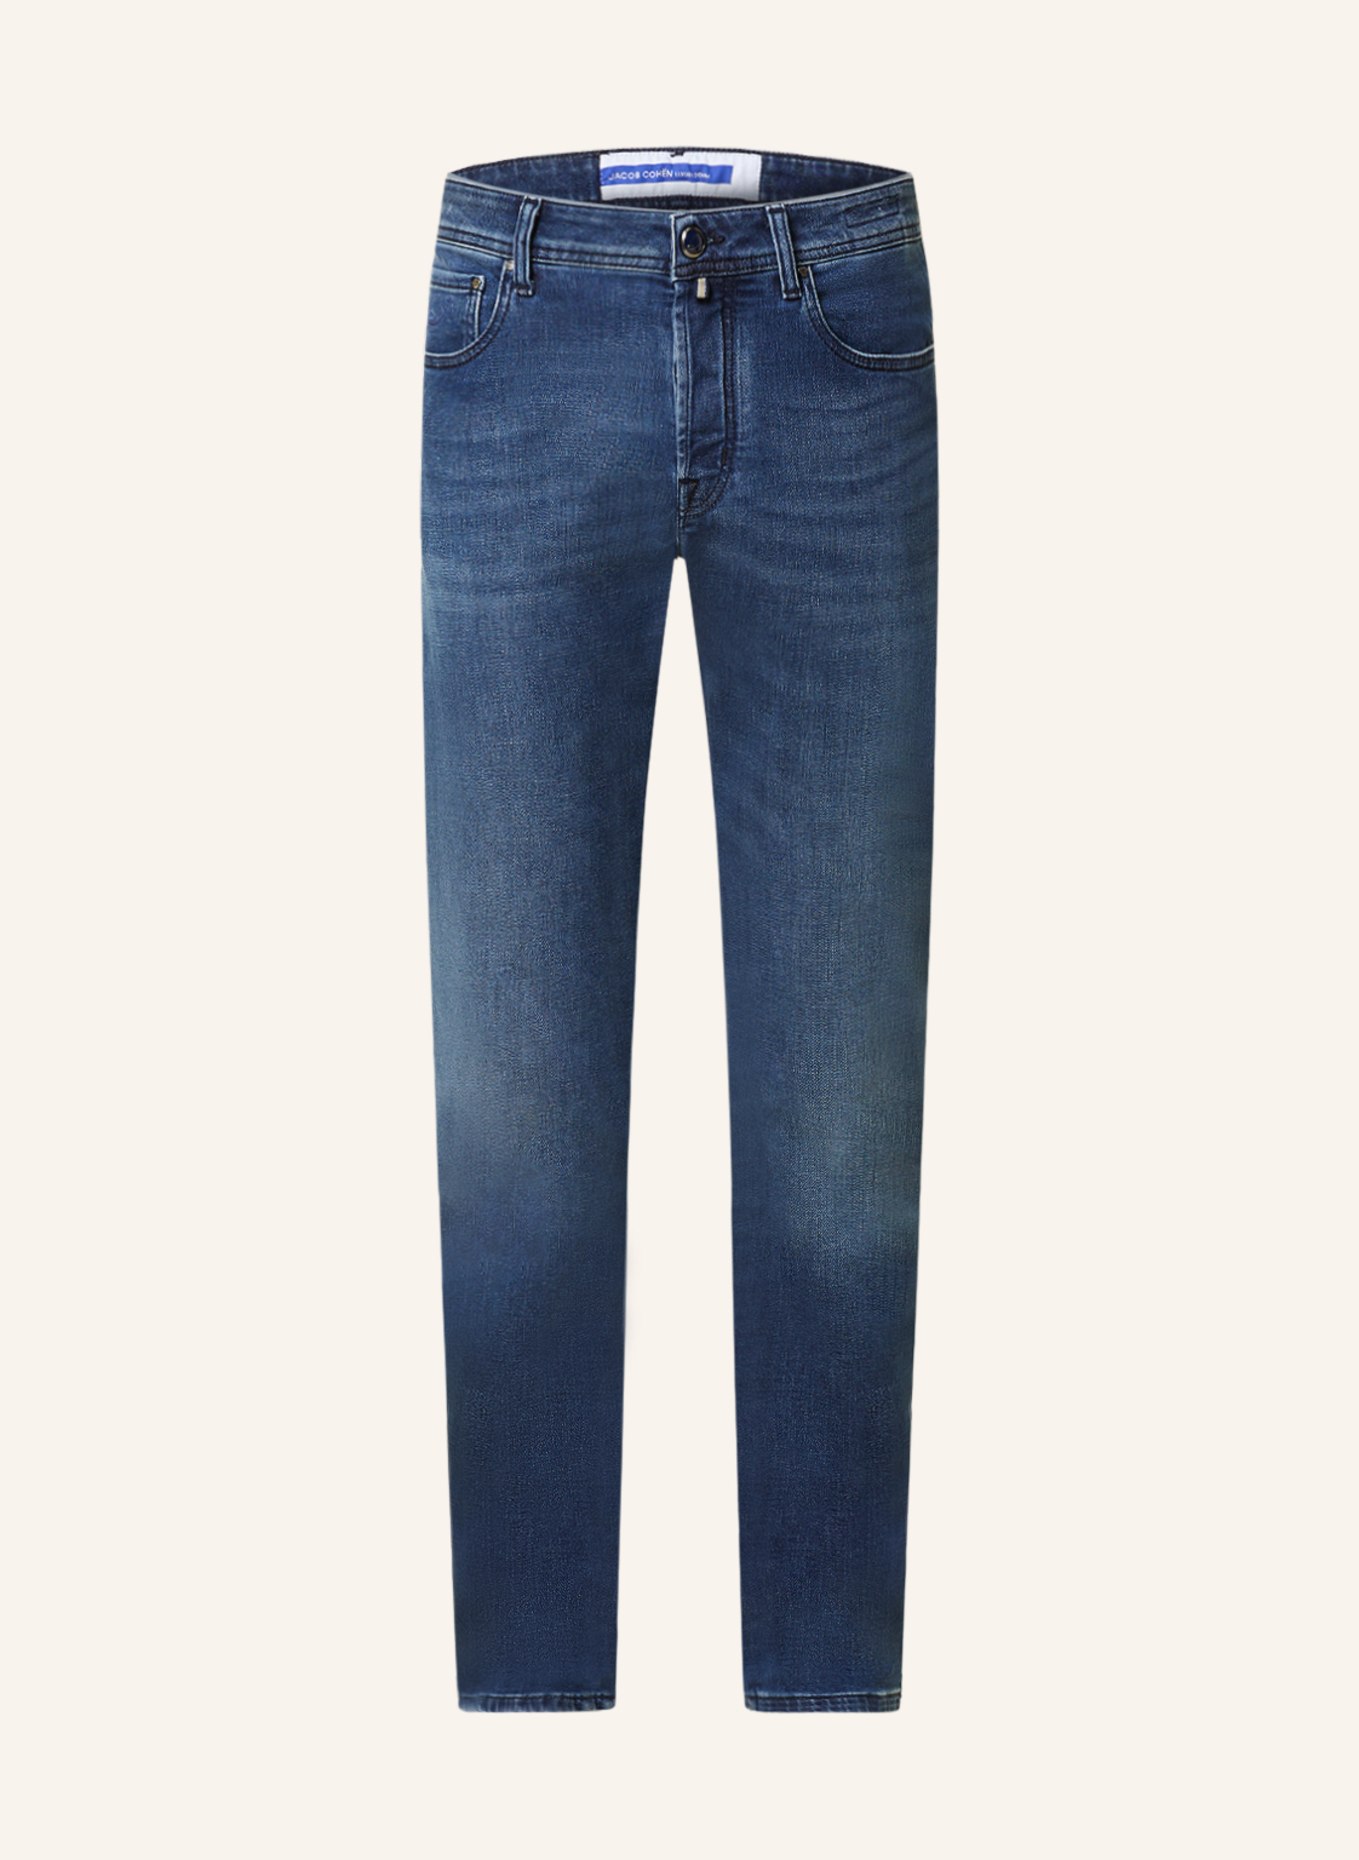 JACOB COHEN Jeans BARD Slim Fit, Farbe: 470D Mid Blue (Bild 1)